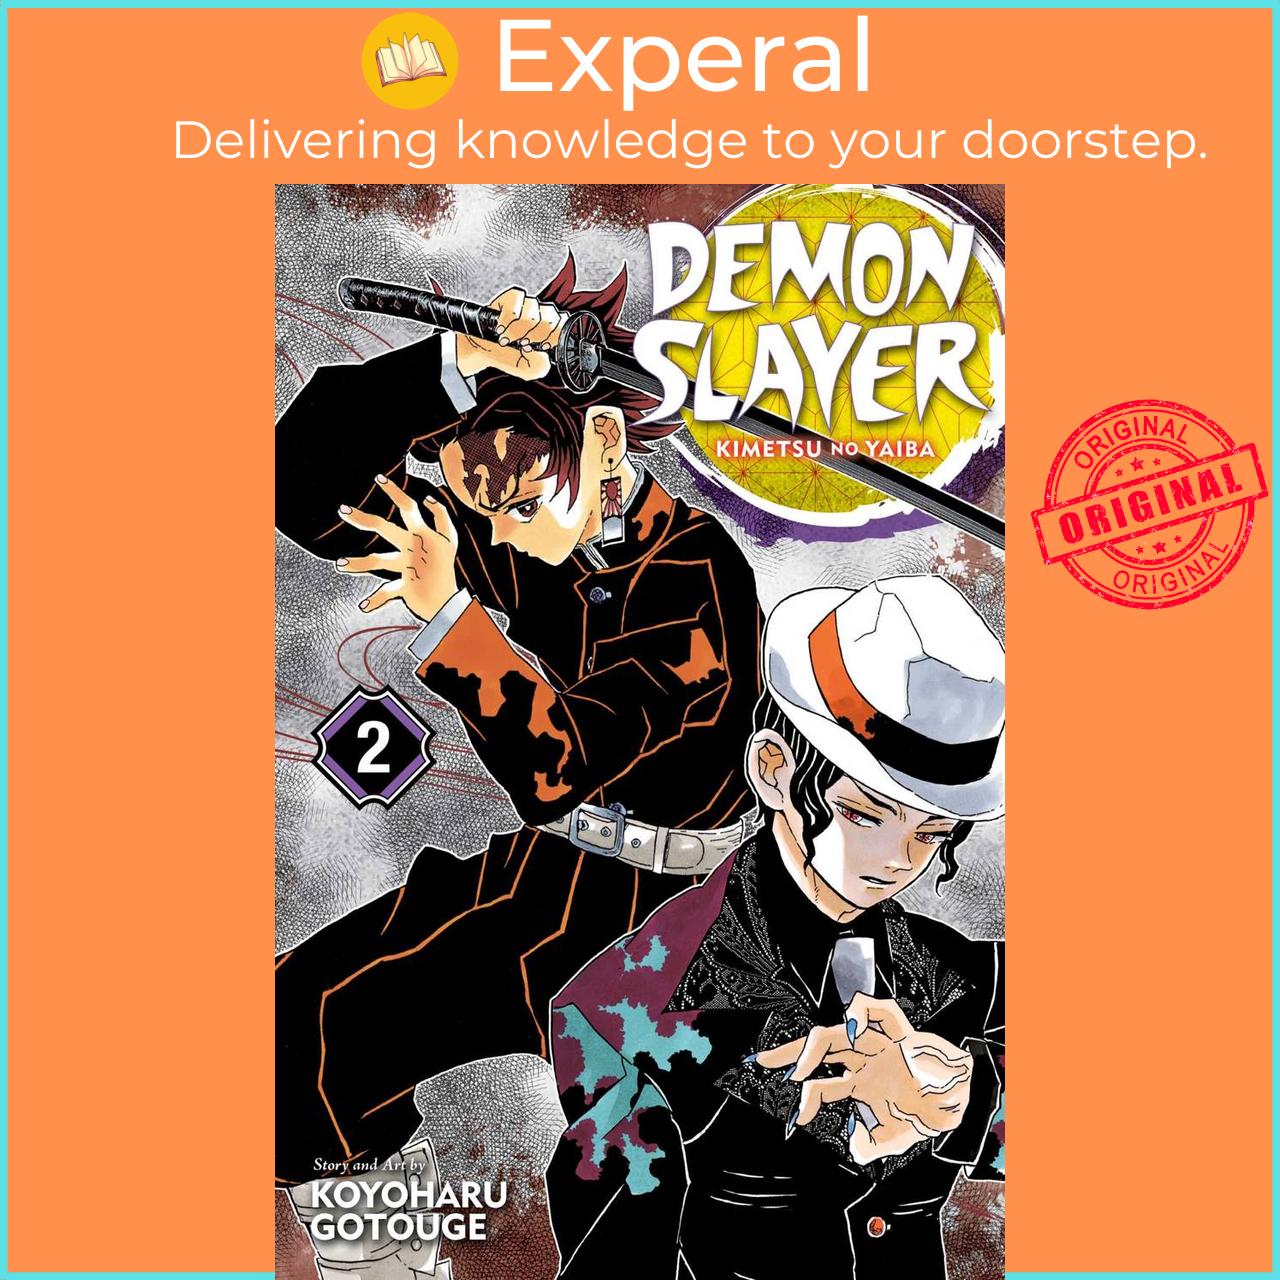 Sách - Demon Slayer: Kimetsu no Yaiba, Vol. 2 by Koyoharu Gotouge (UK edition, paperback)